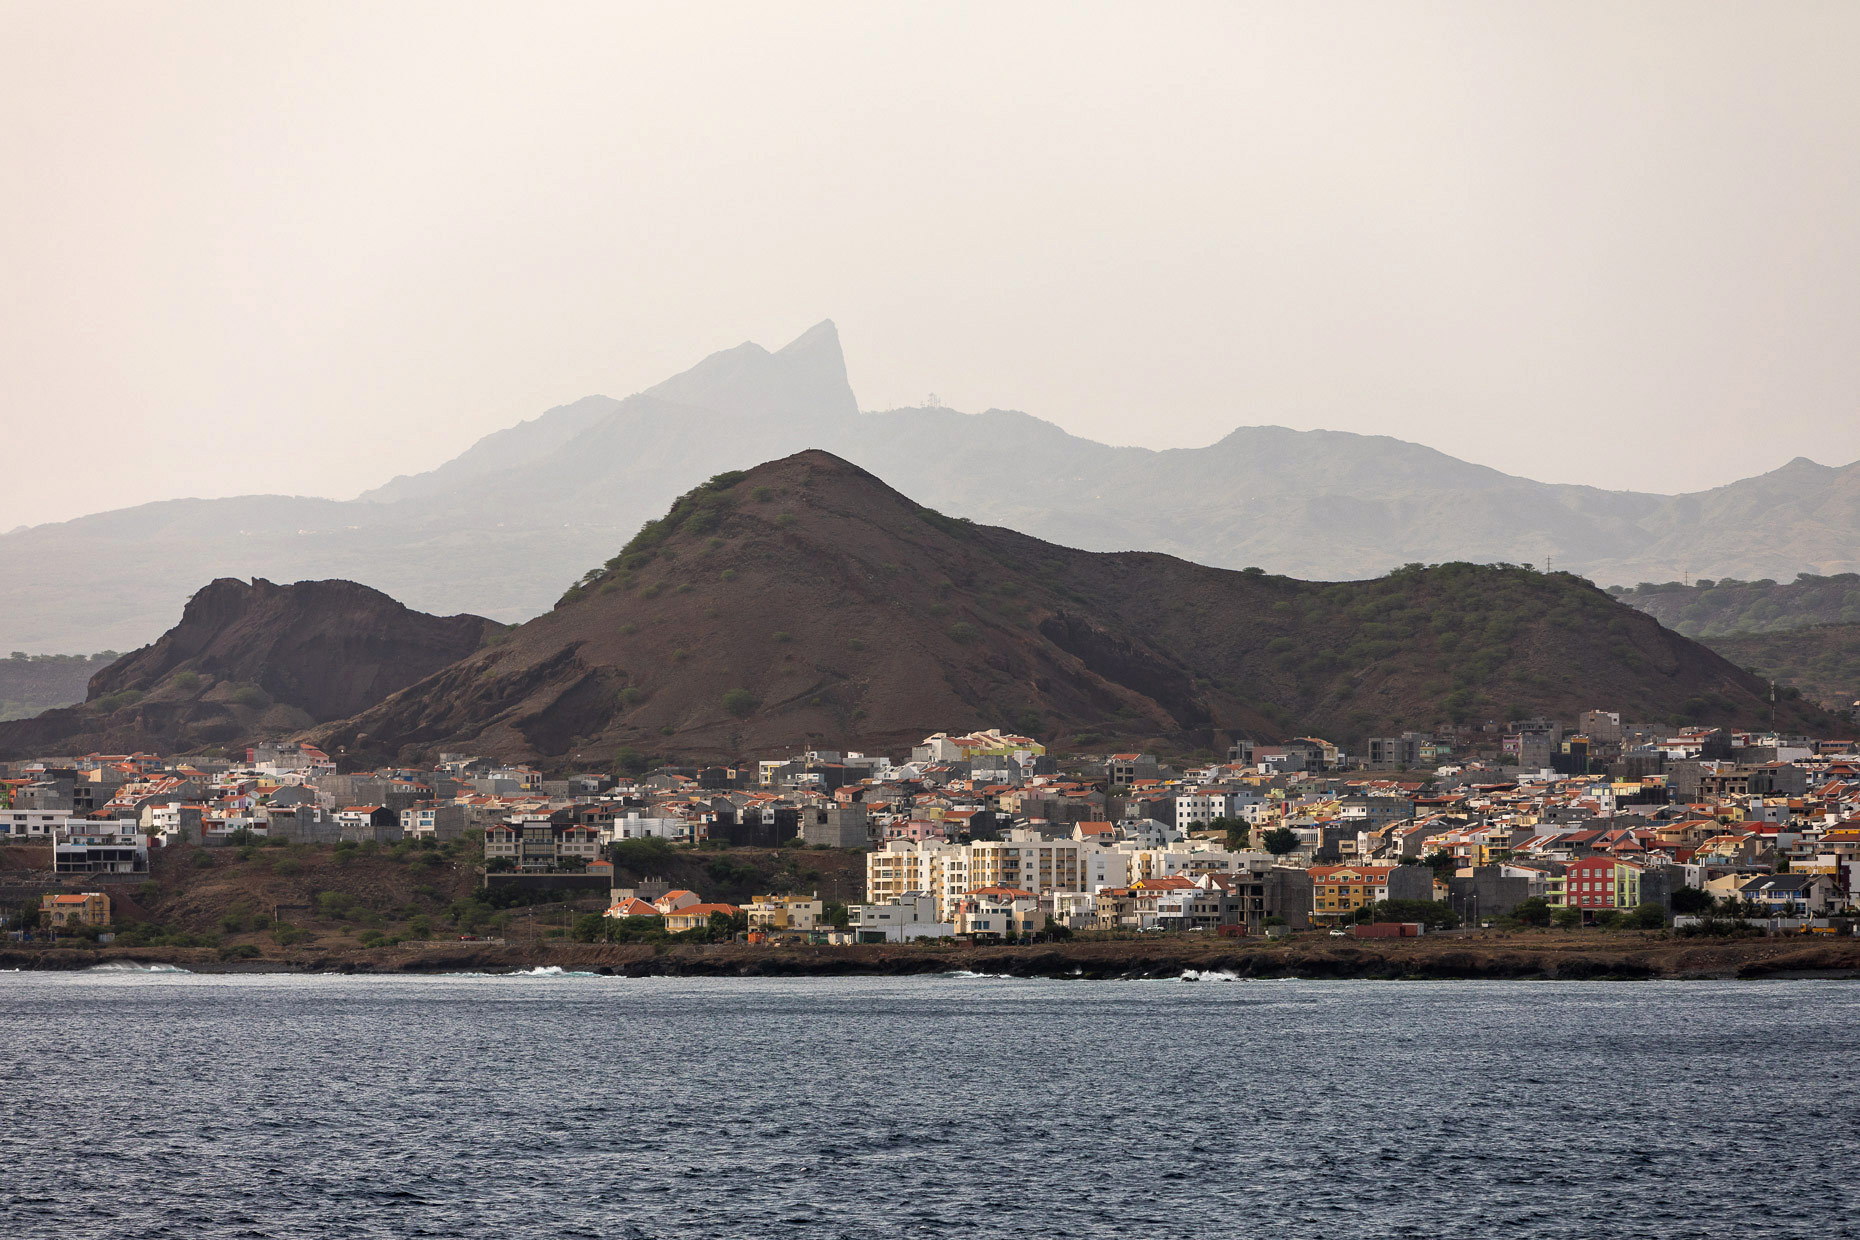 Santiago Island, Cape Verde